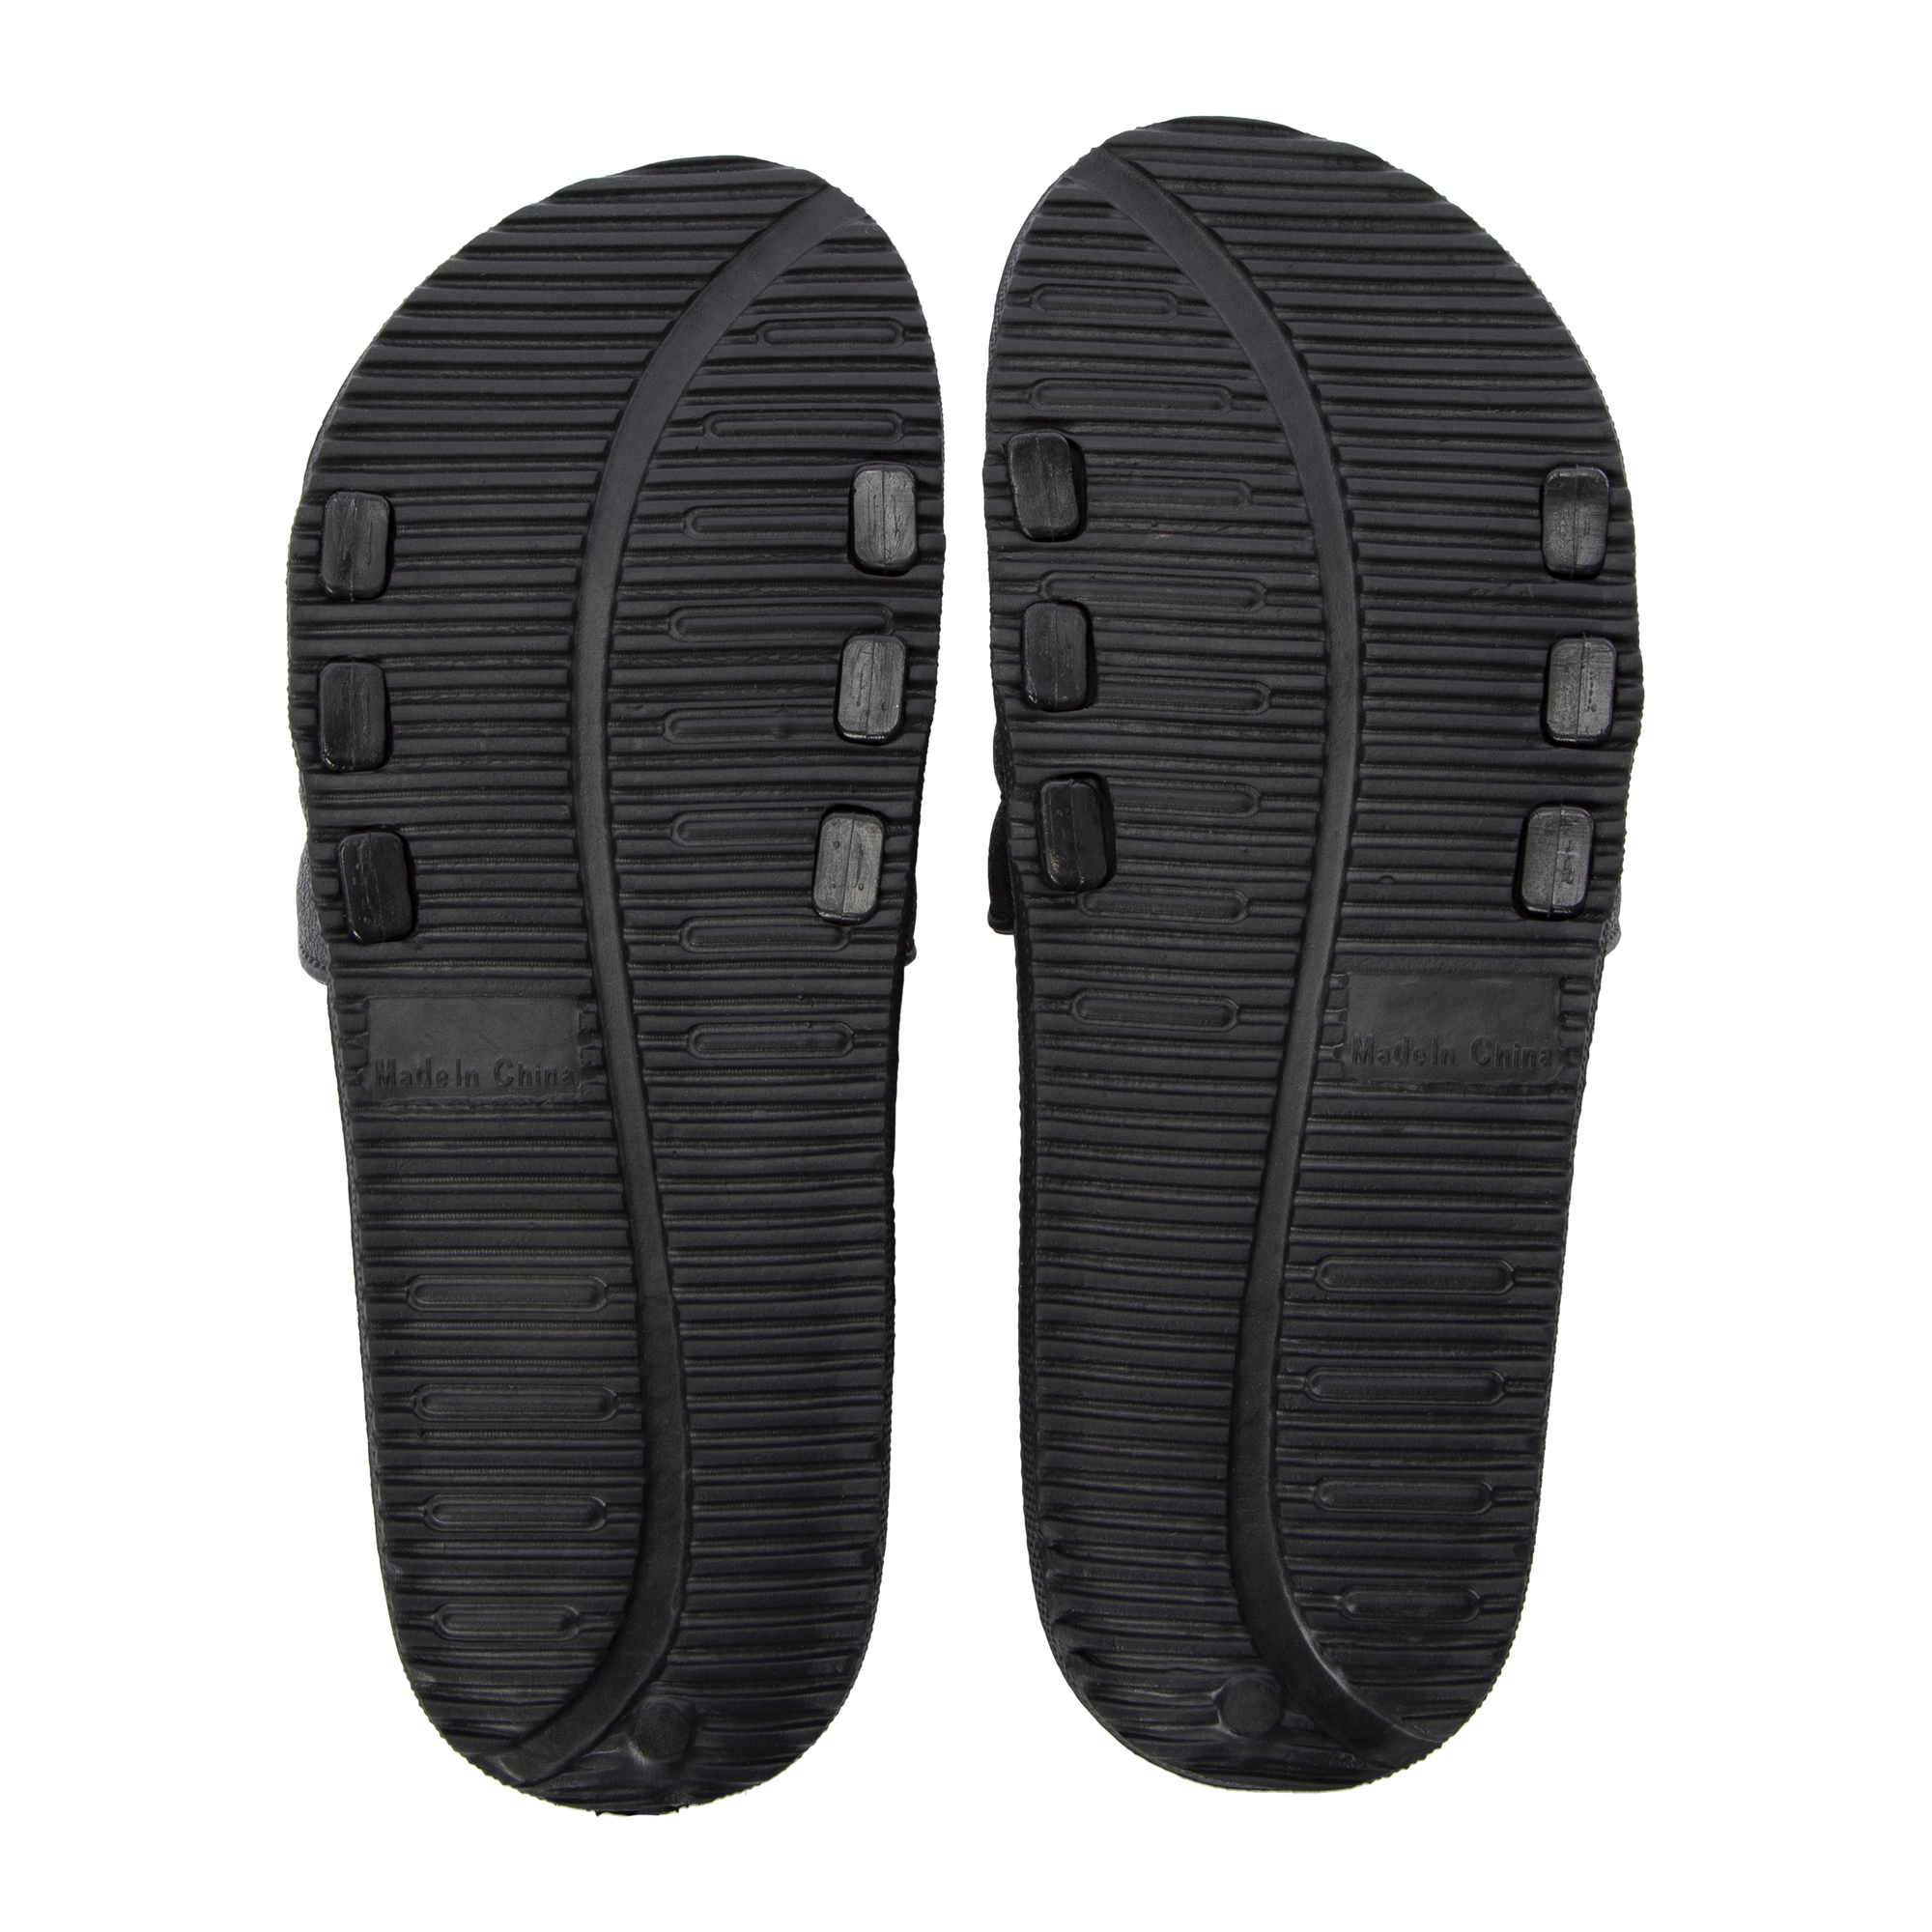 ladies black slide sandals